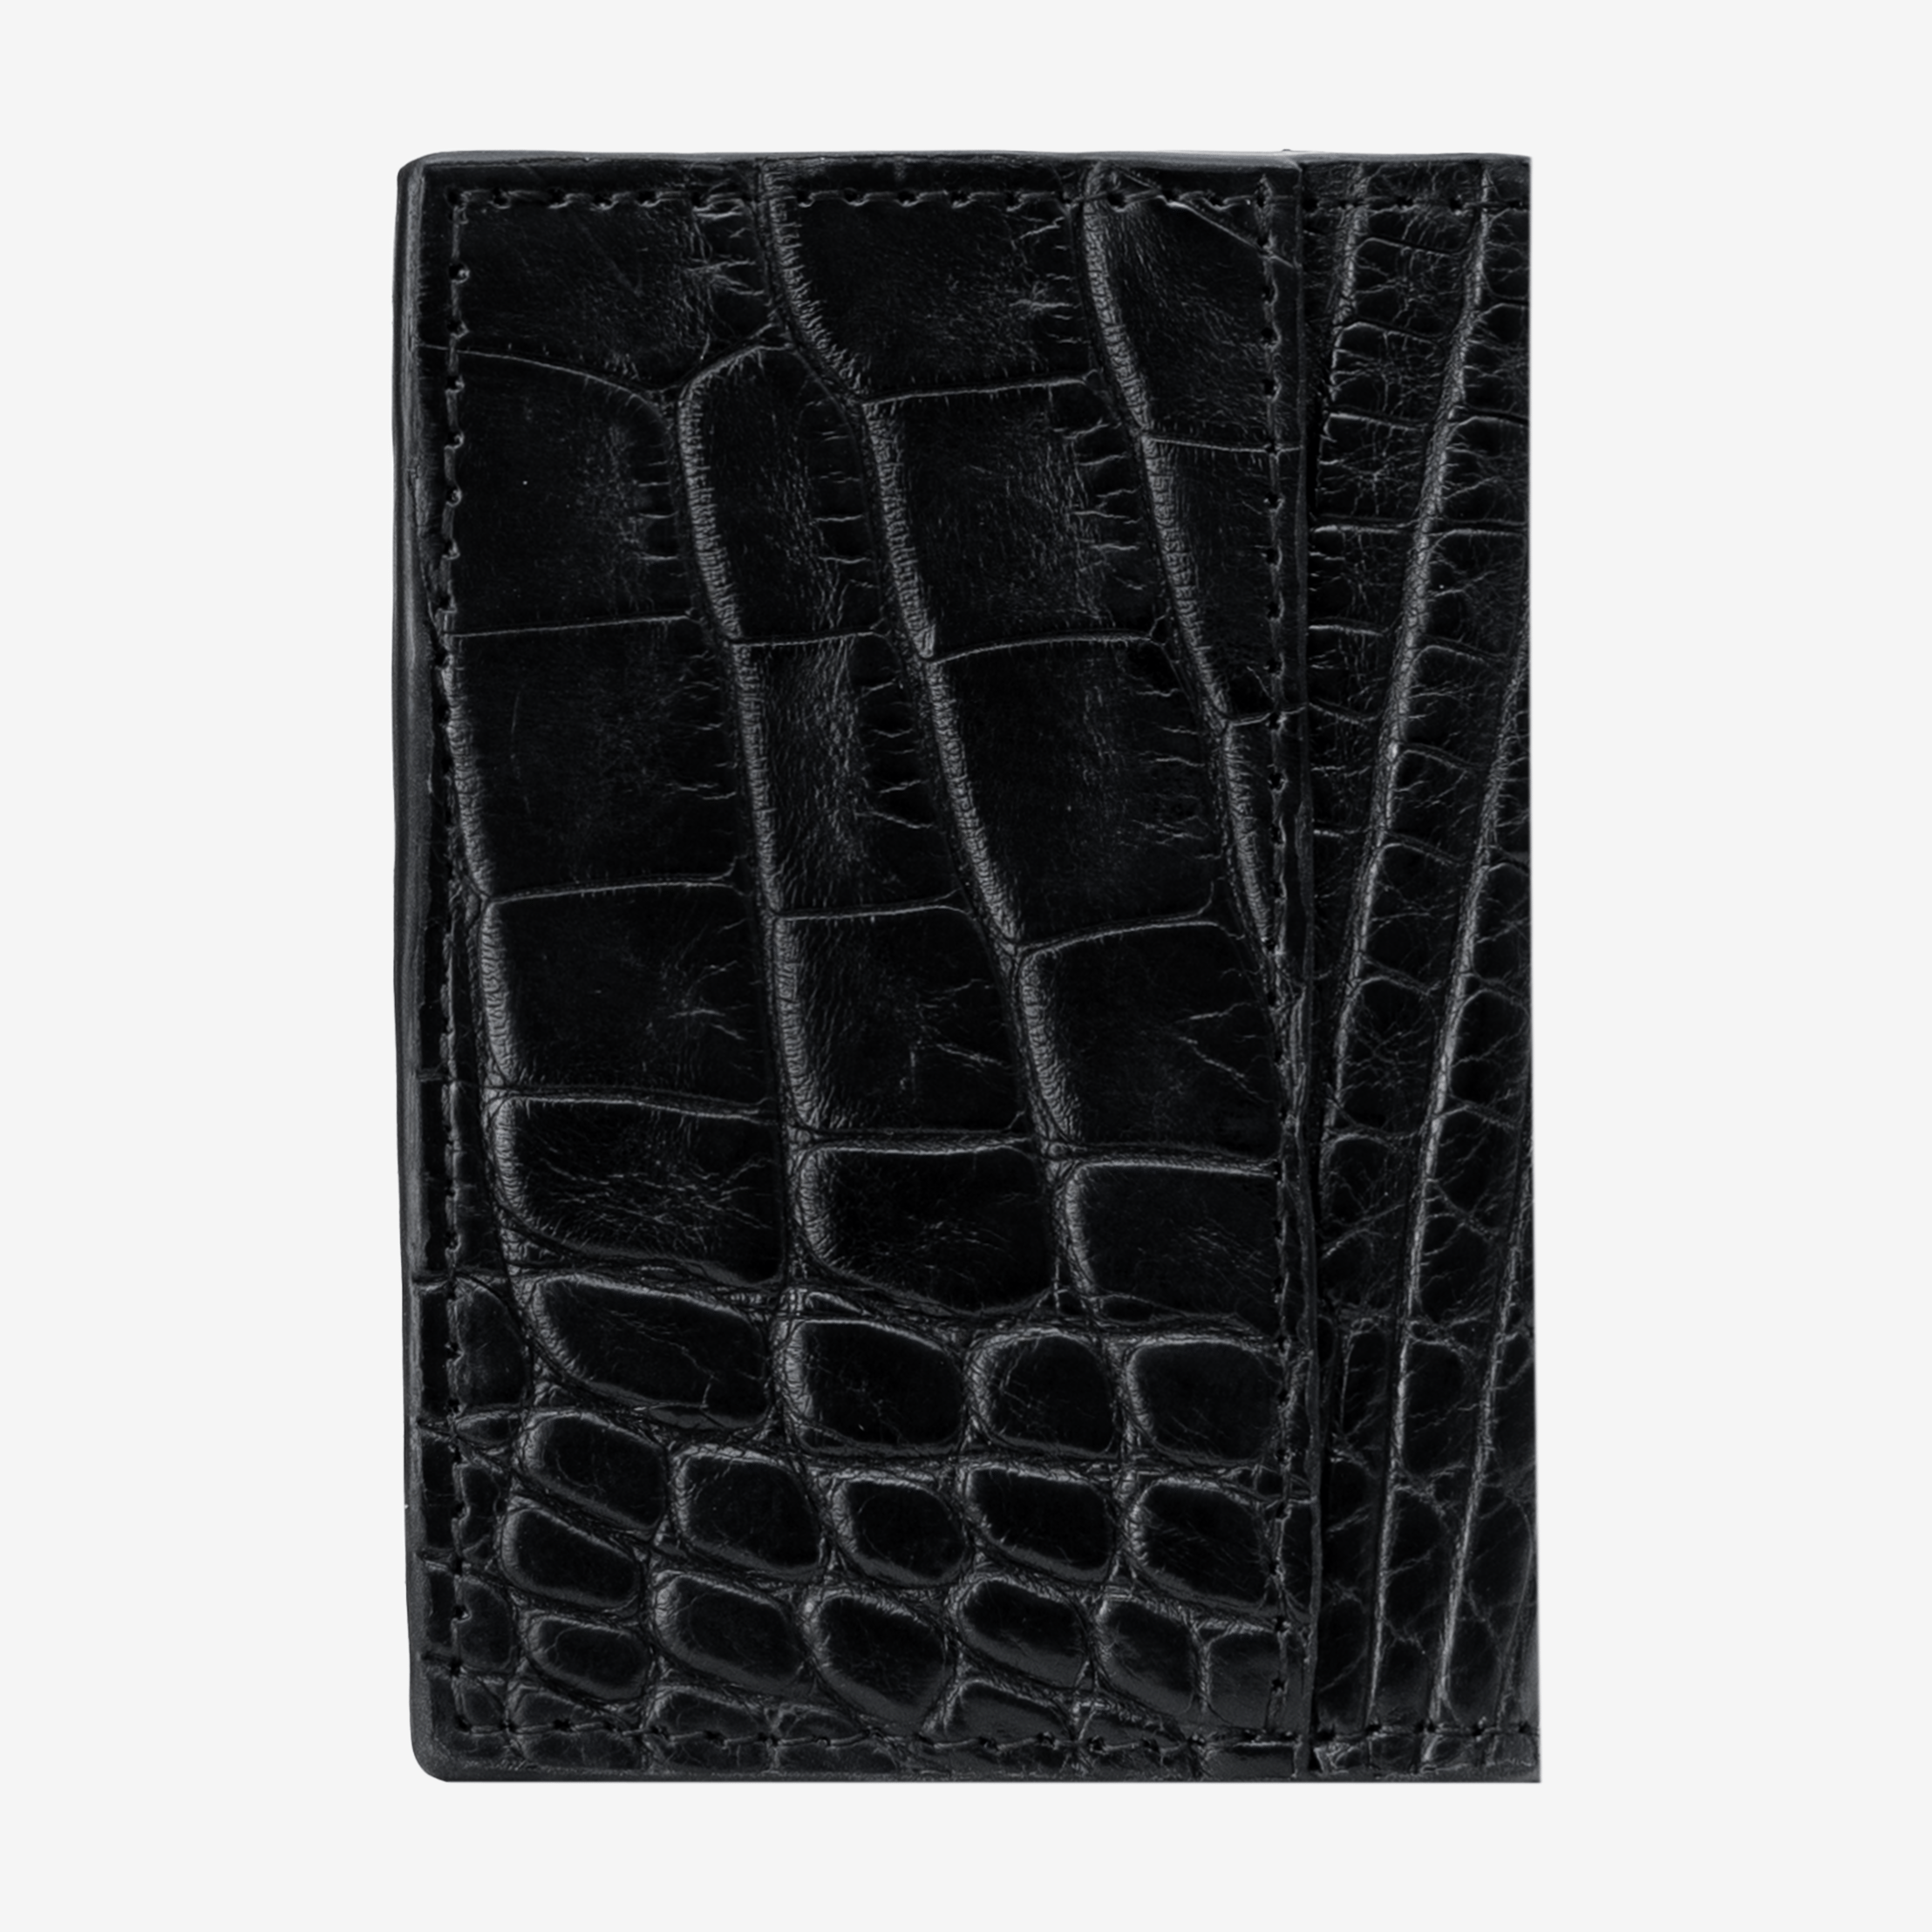 Veneno Leather Goods Tarjetero Vertical "Huracán" Billionaire Croc Black